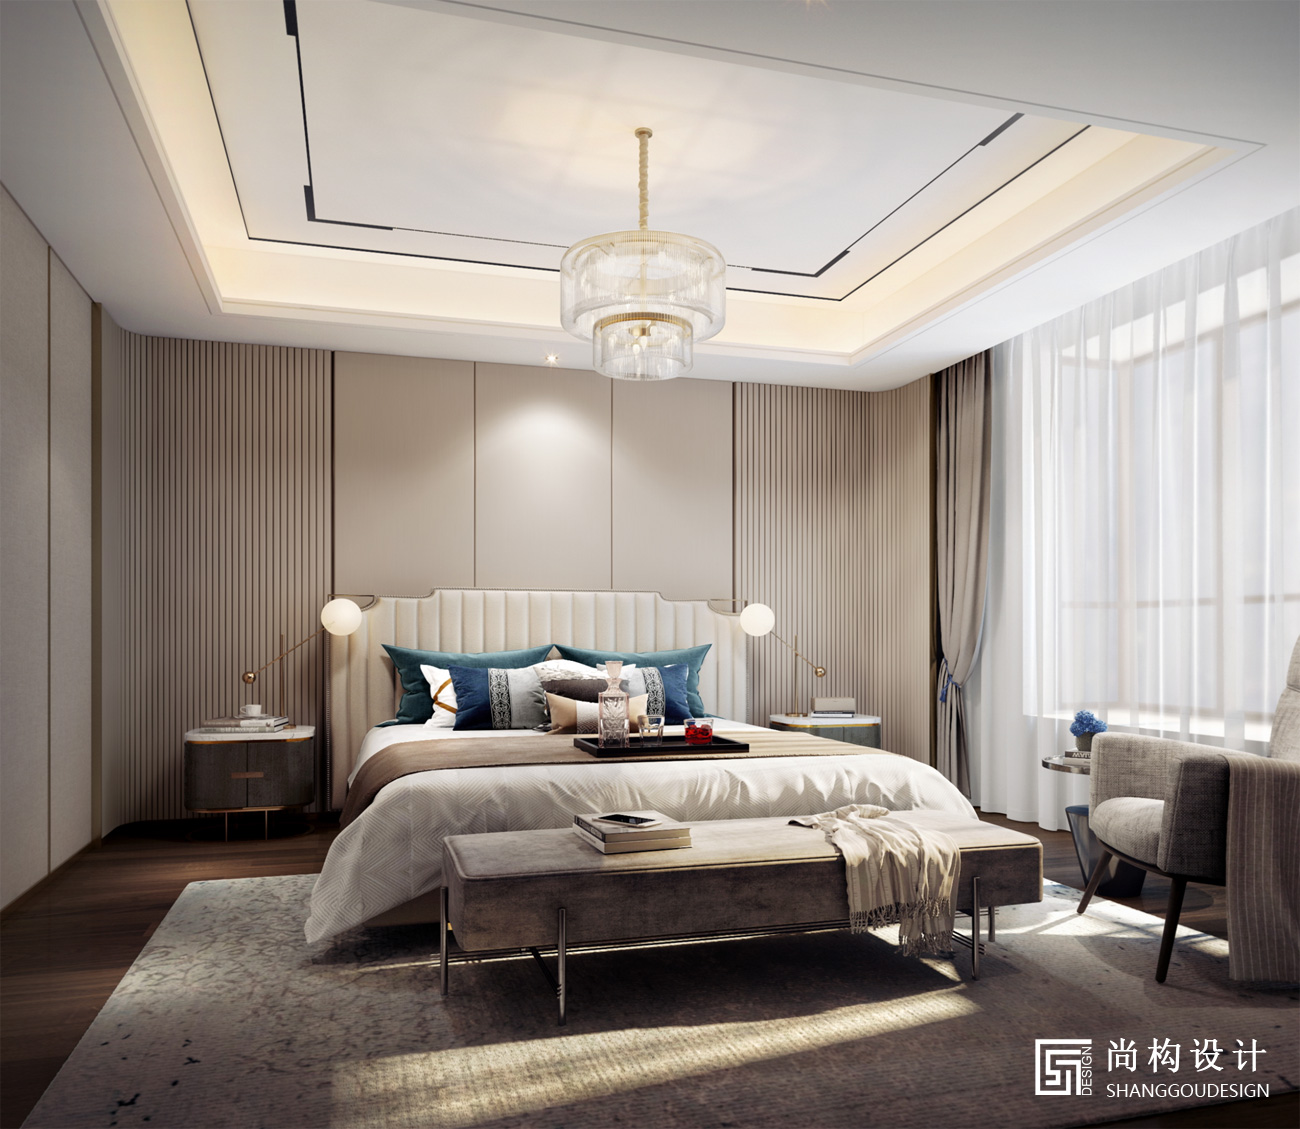 Xuchang-Small Sized Apartment